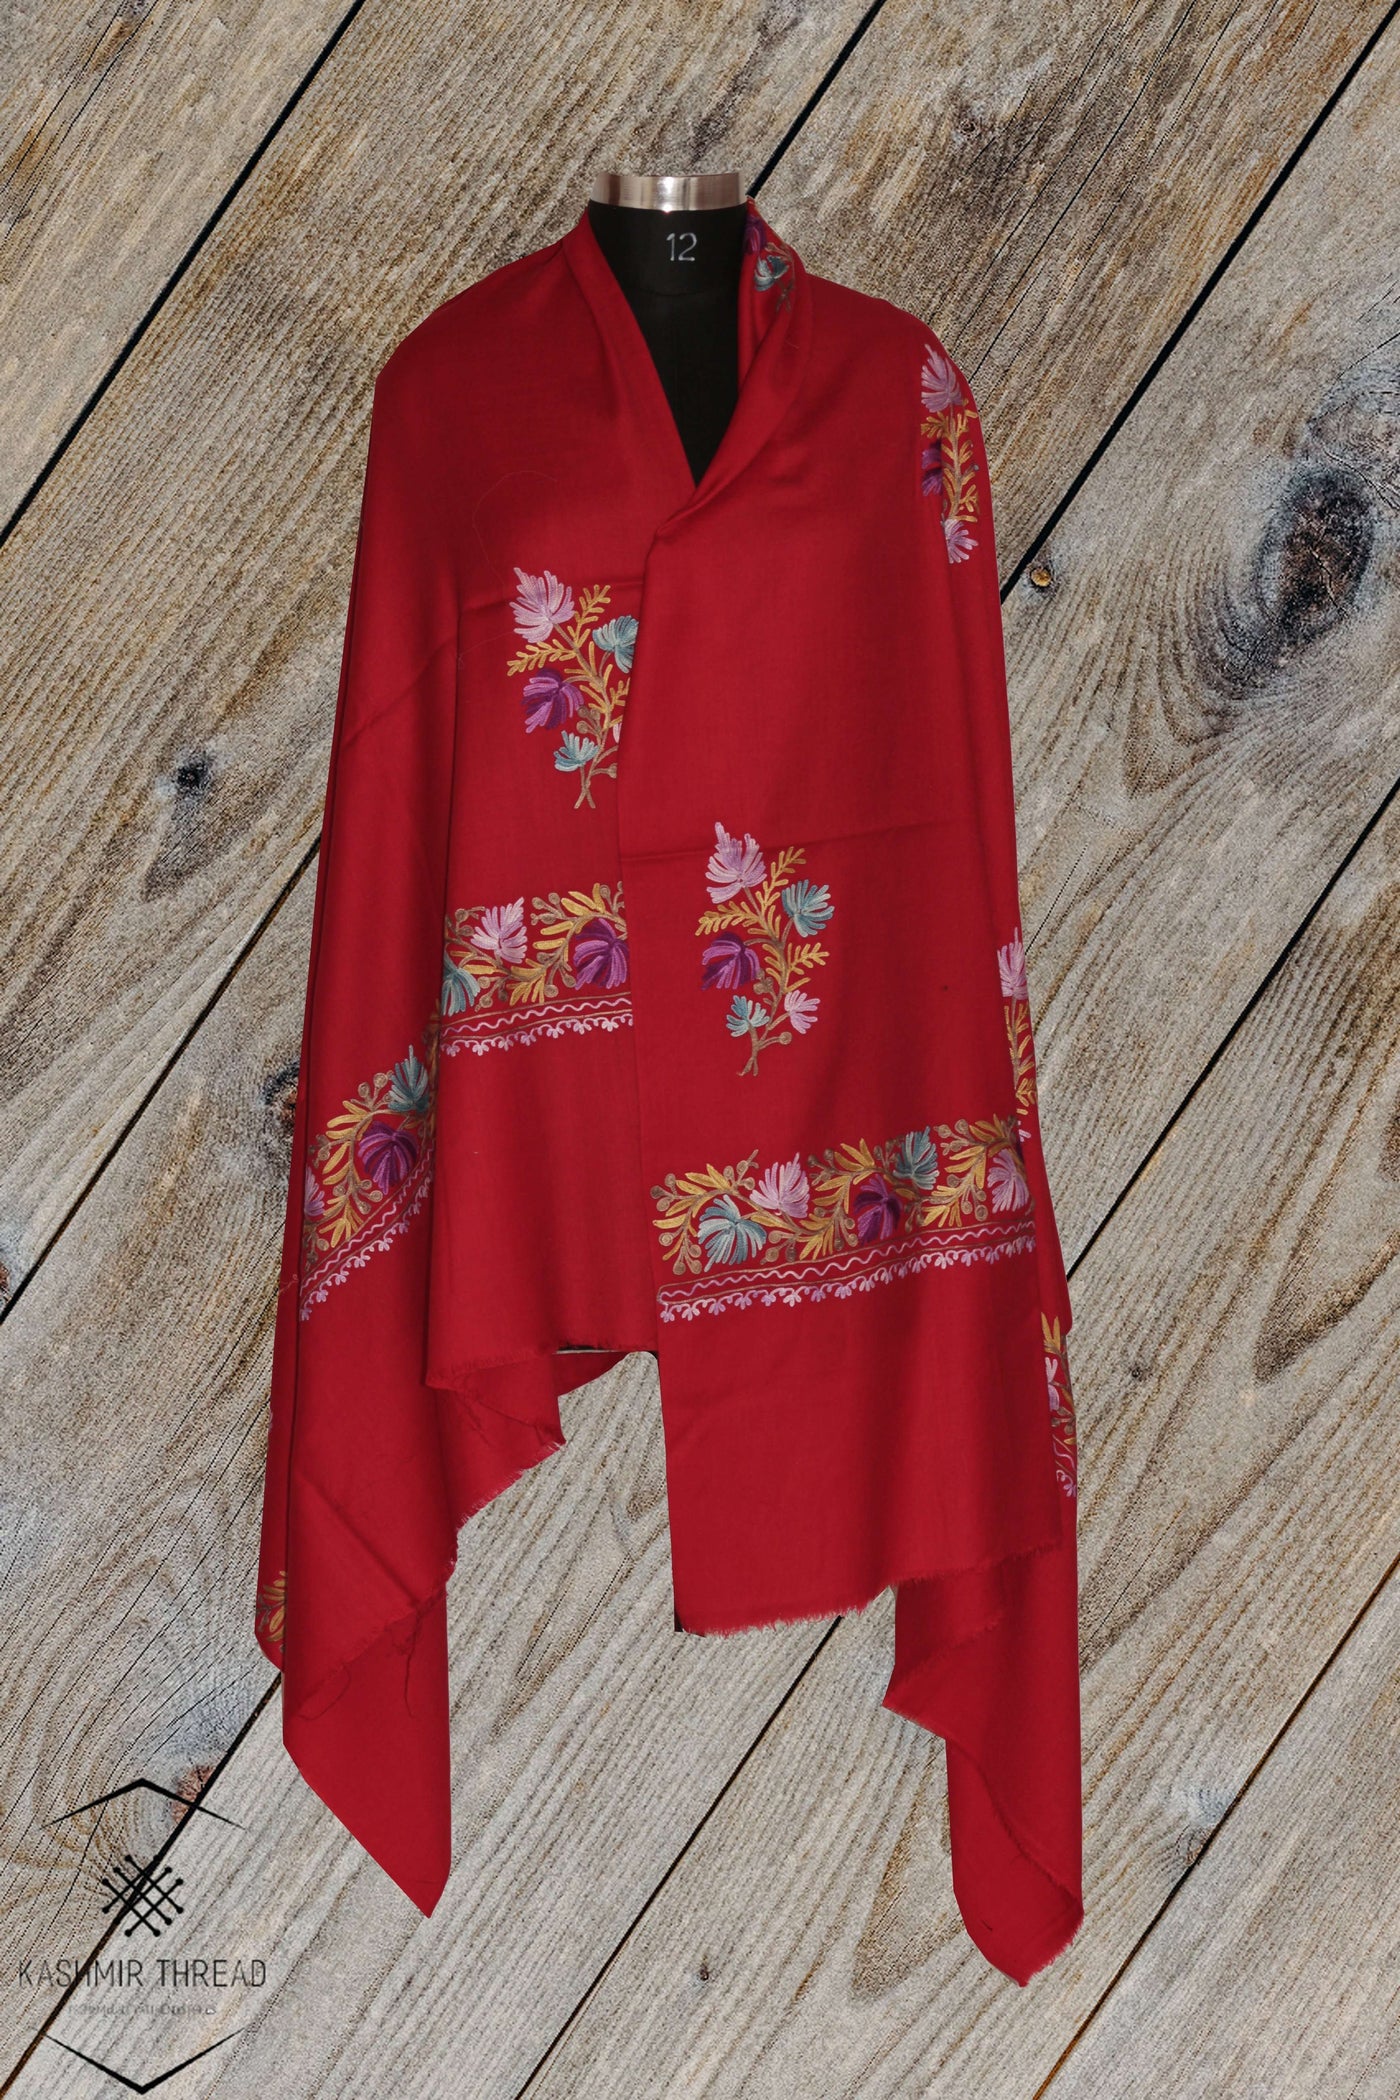 Kashmir Thread shawl Red Kashmiri Woolen Shawl with Aari Embroidery